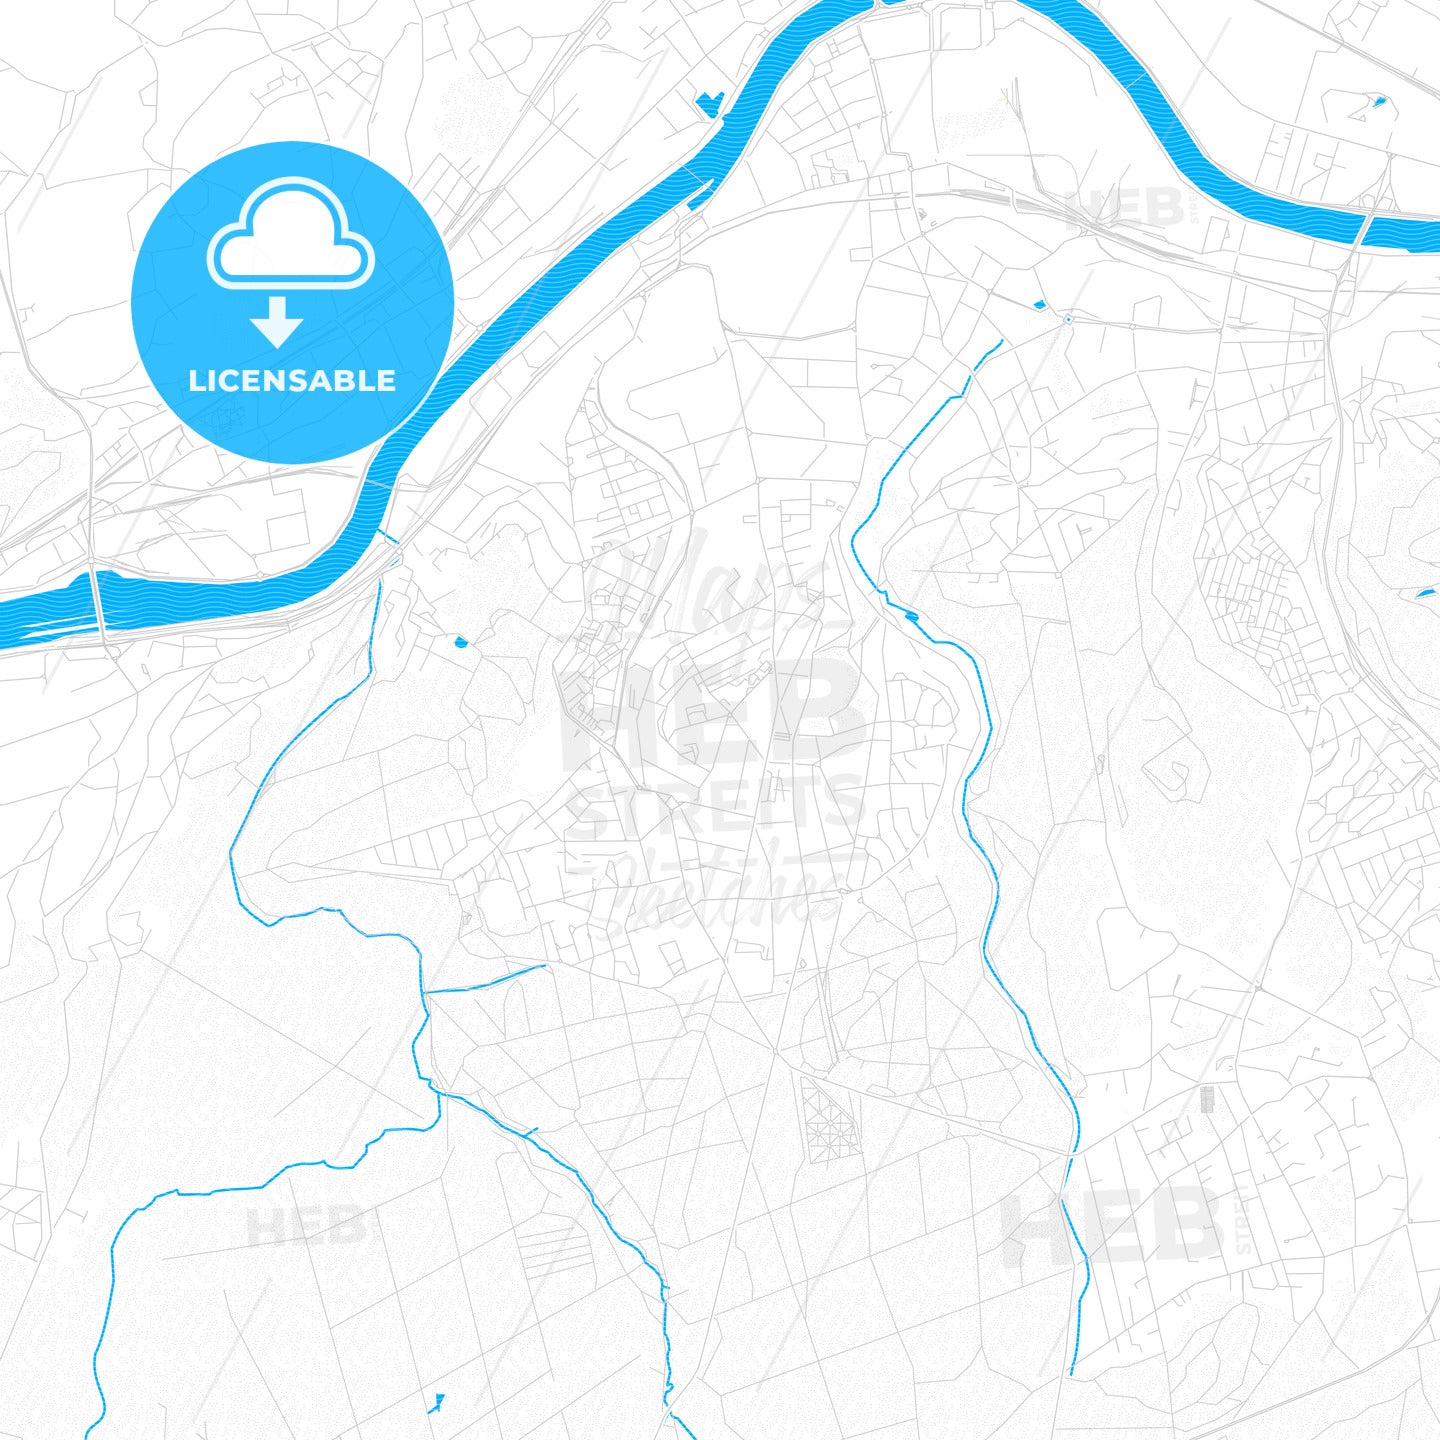 Seraing, Belgium PDF vector map with water in focus